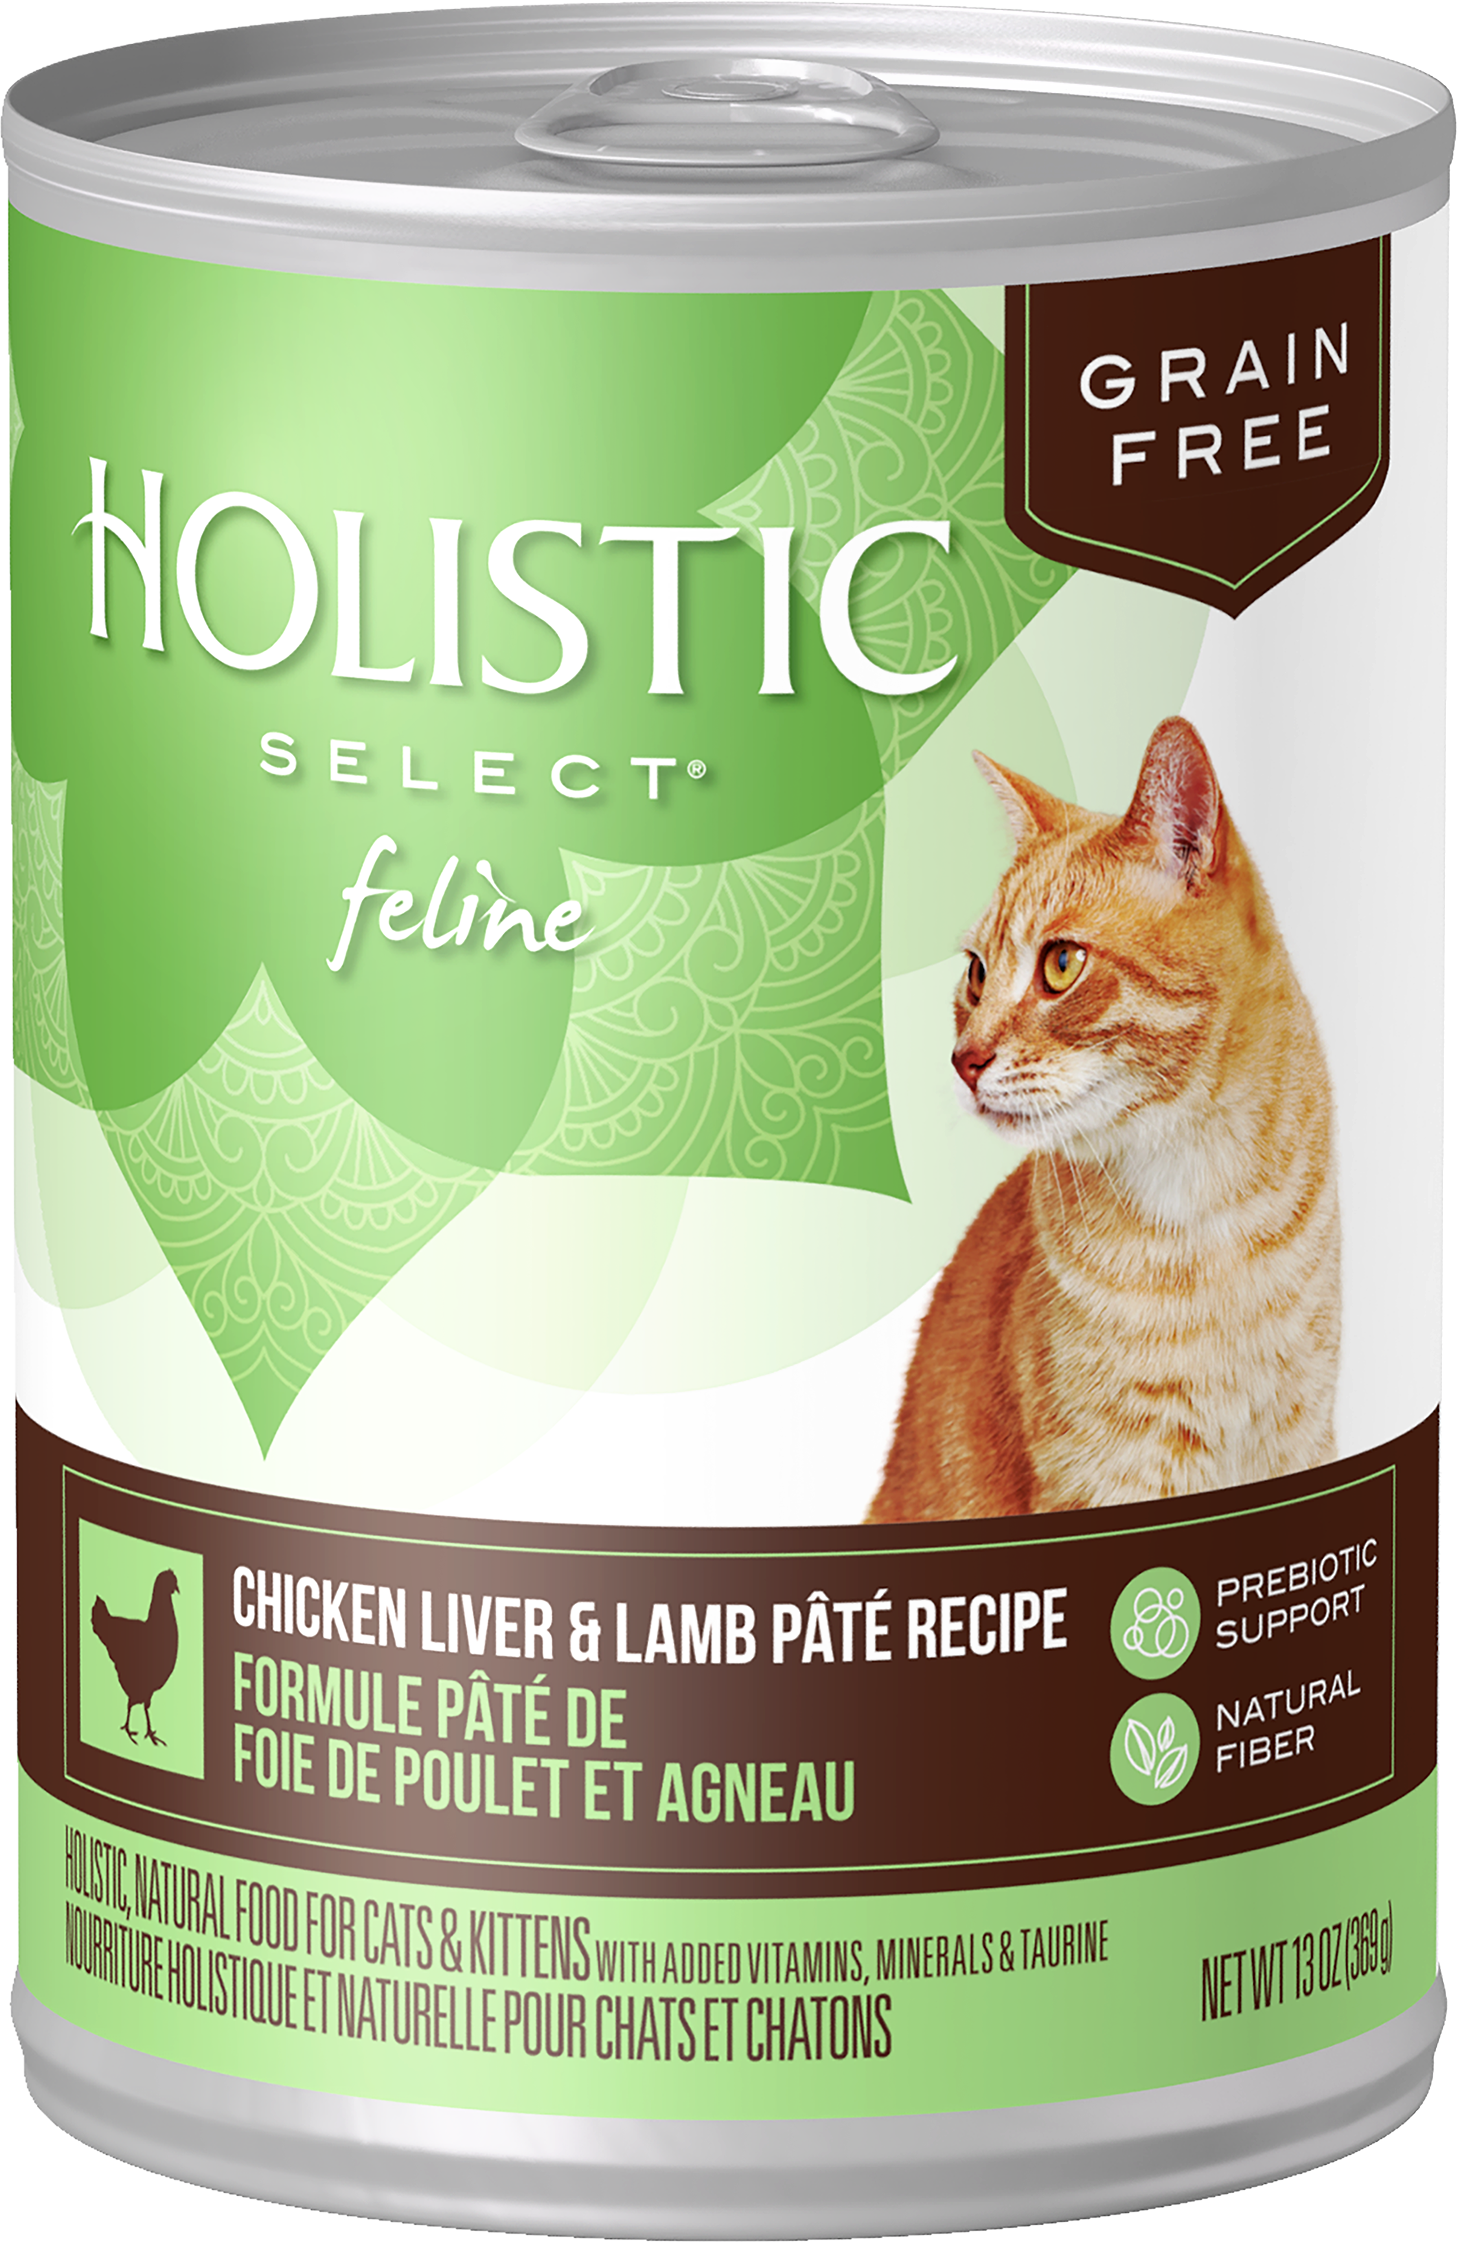 Grain Free Chicken Liver & Lamb Pâté Recipe product packaging image 1